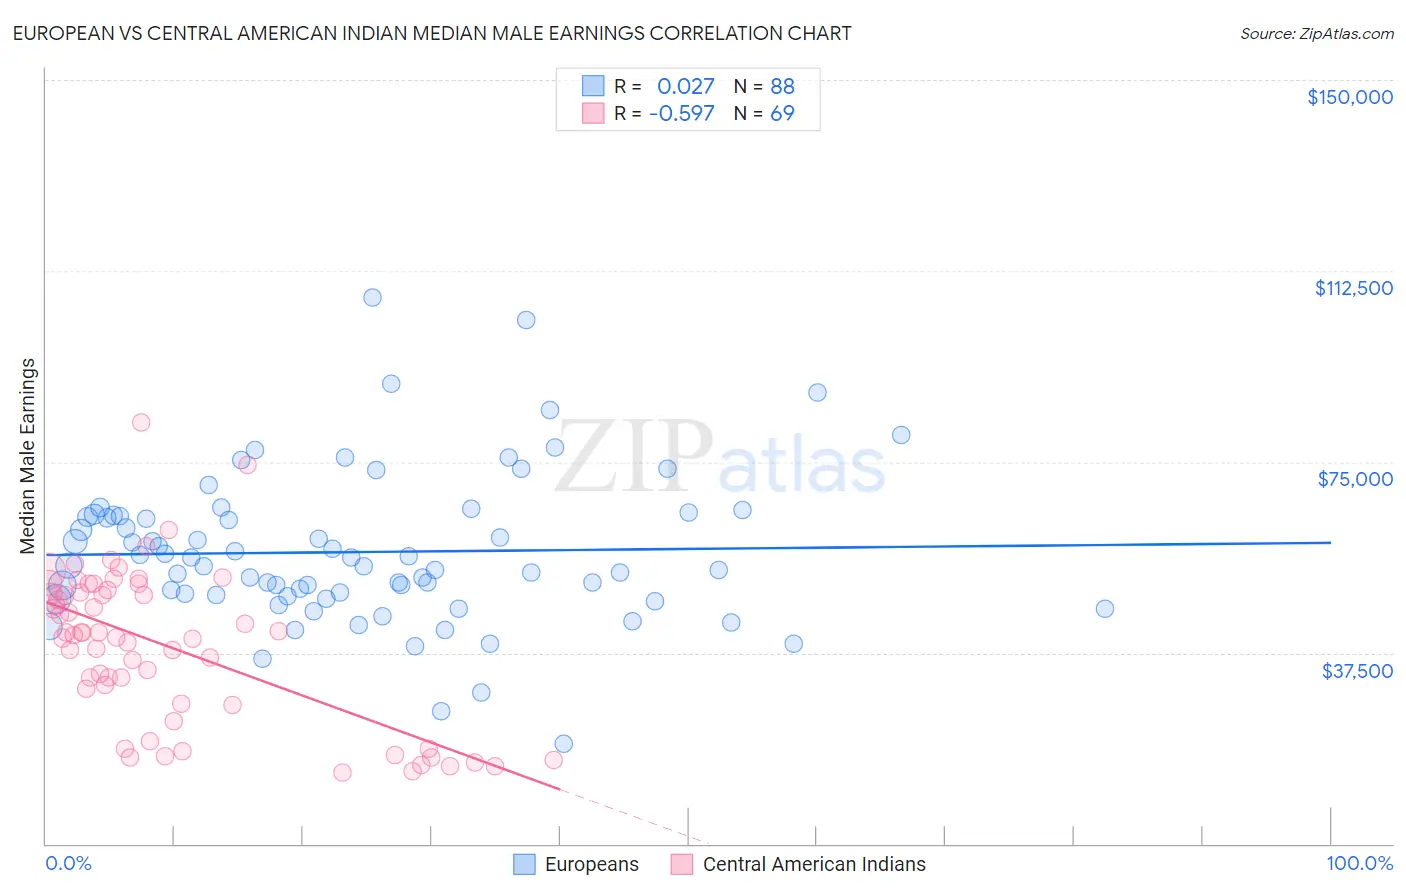 European vs Central American Indian Median Male Earnings